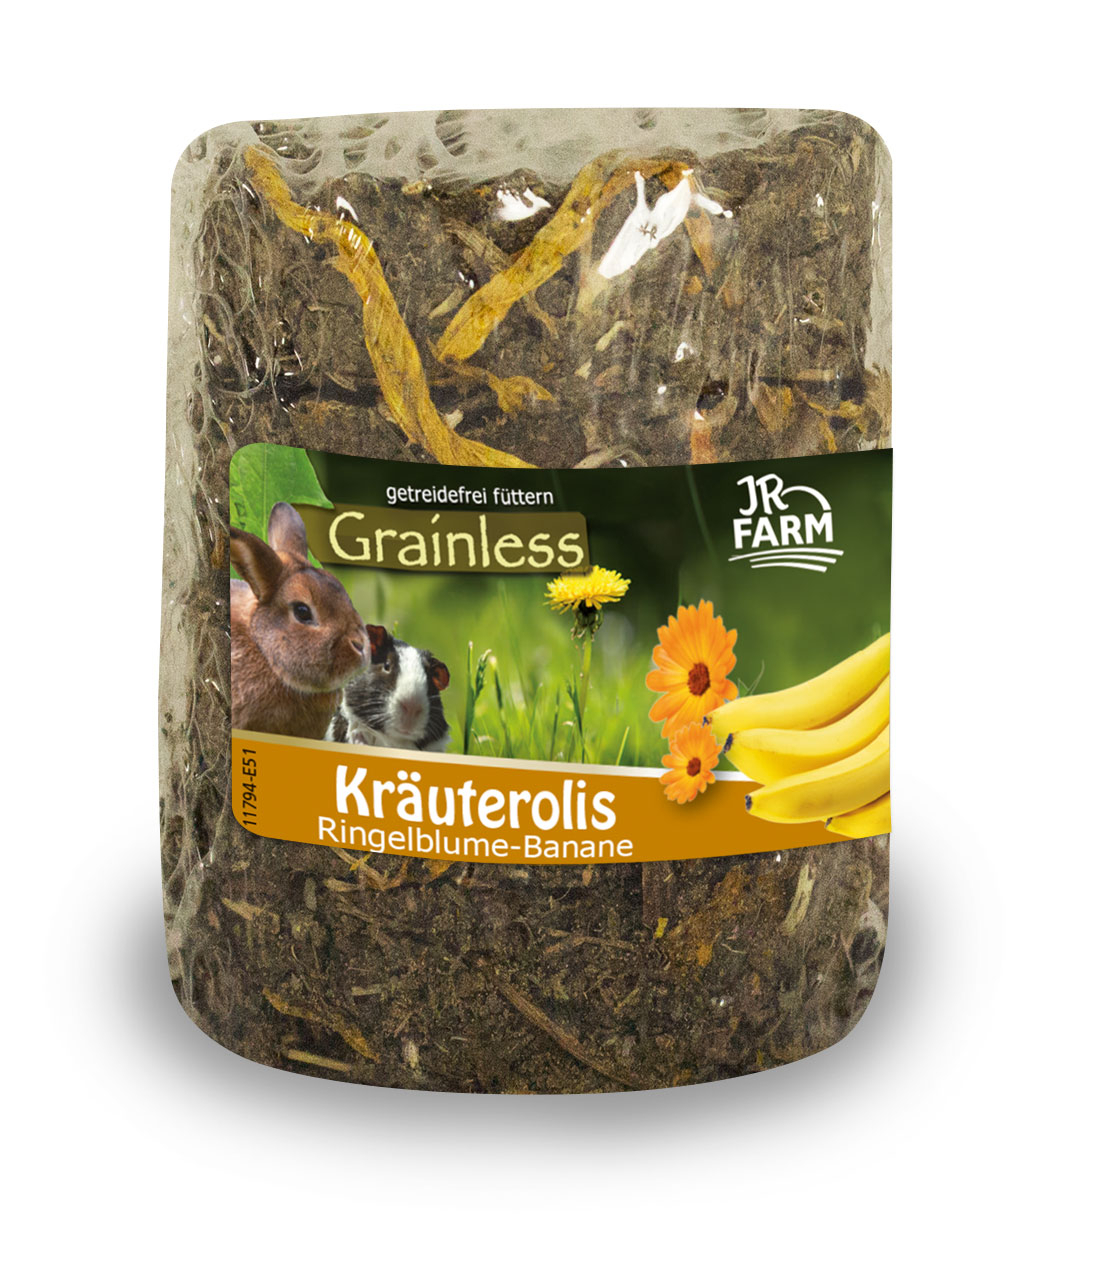 JR FARM Grainless herb rolls Marigold - Banana 80g per conigli nani e roditori